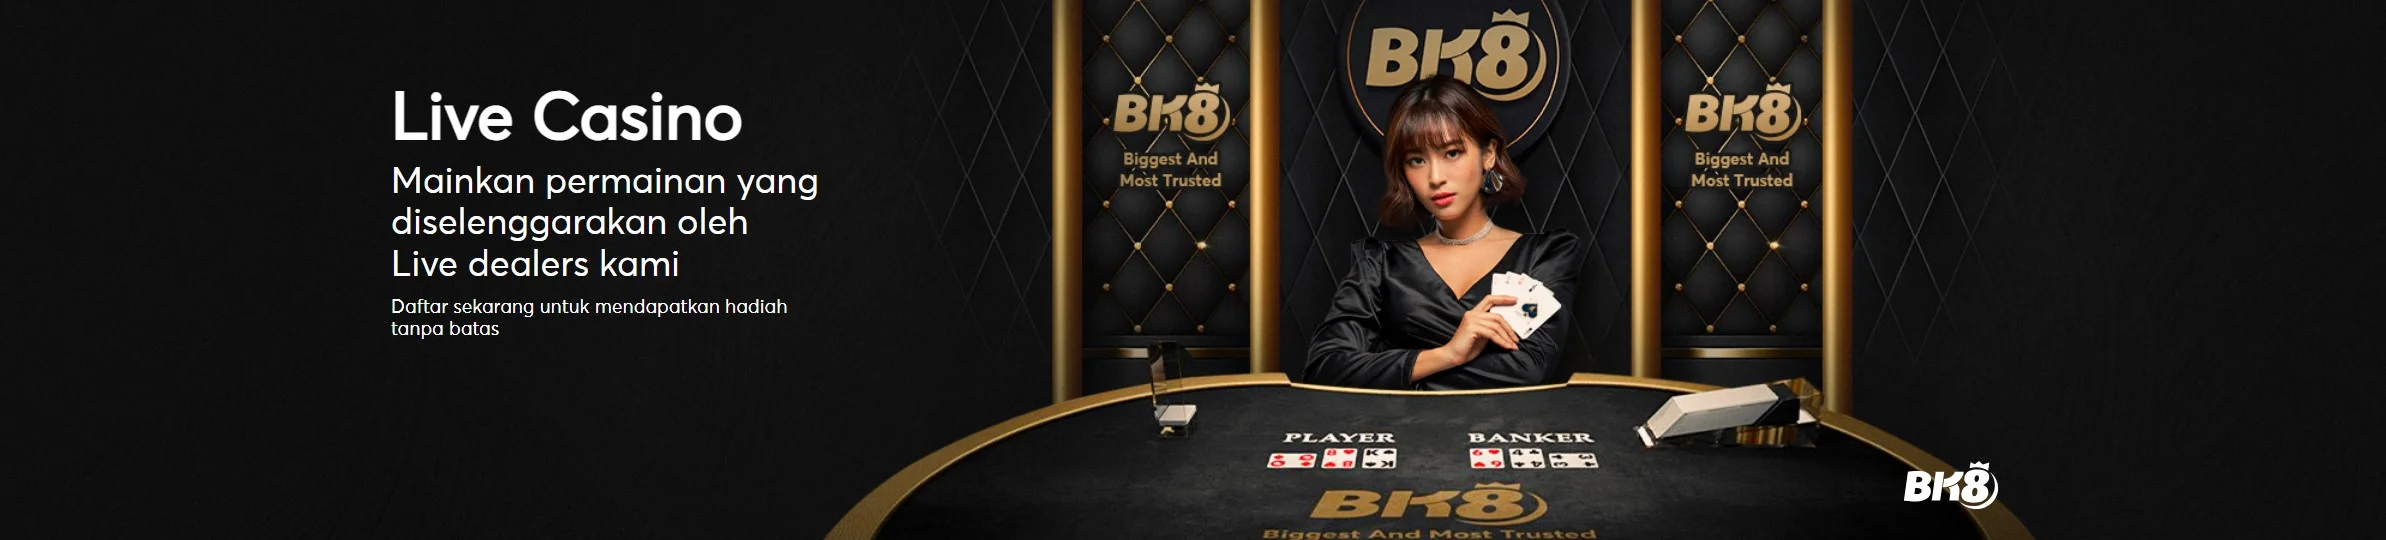 bk8-idr-casino